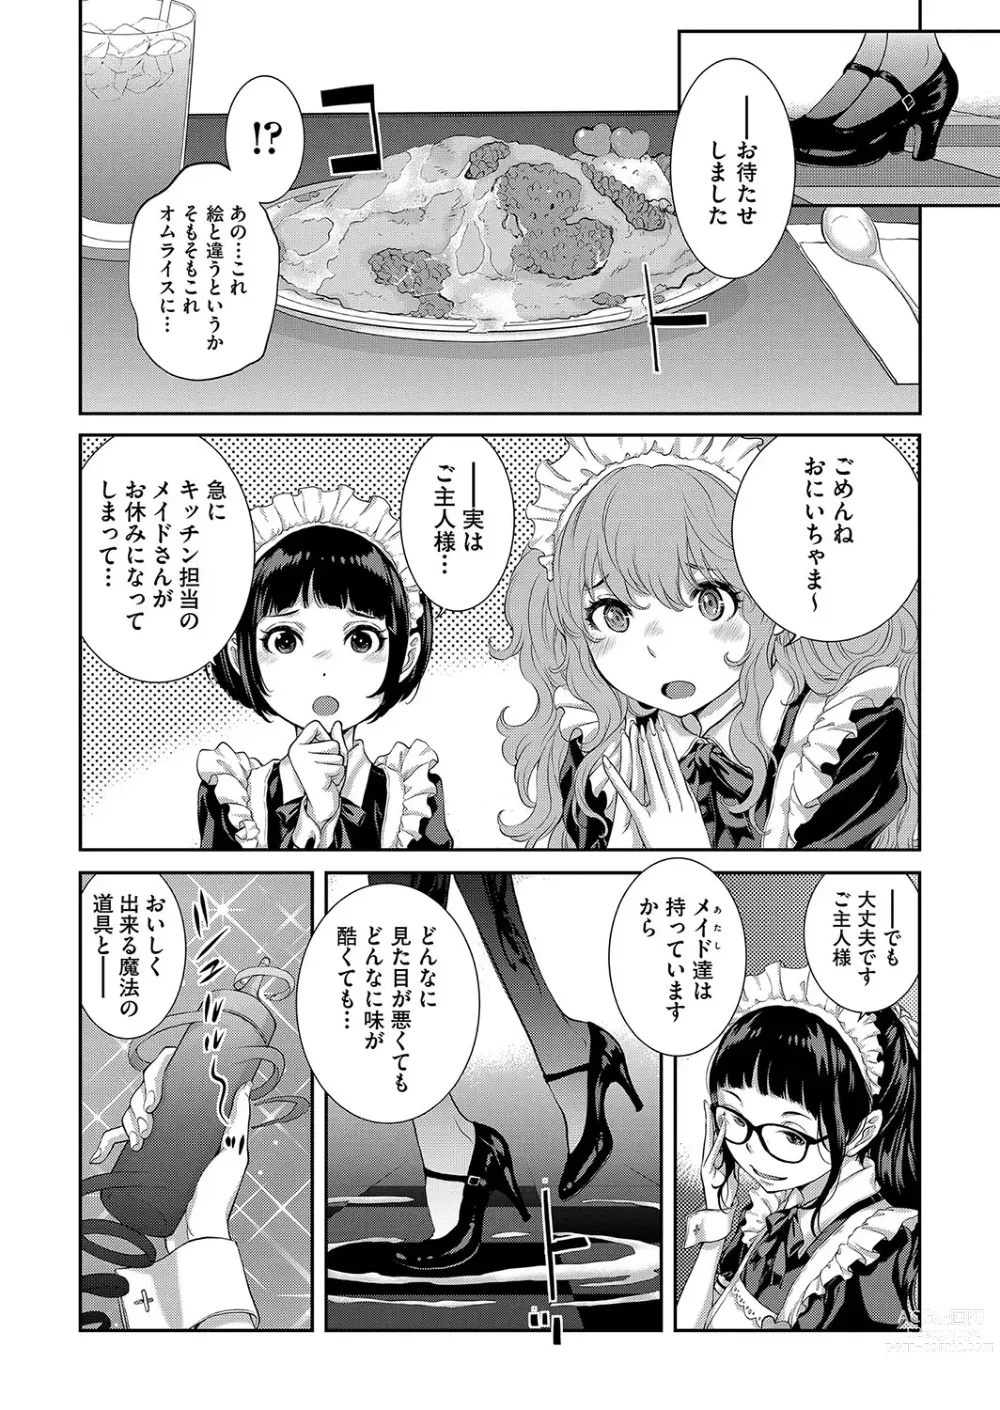 Page 205 of manga Maid Kitan - Maid Misteryous Story